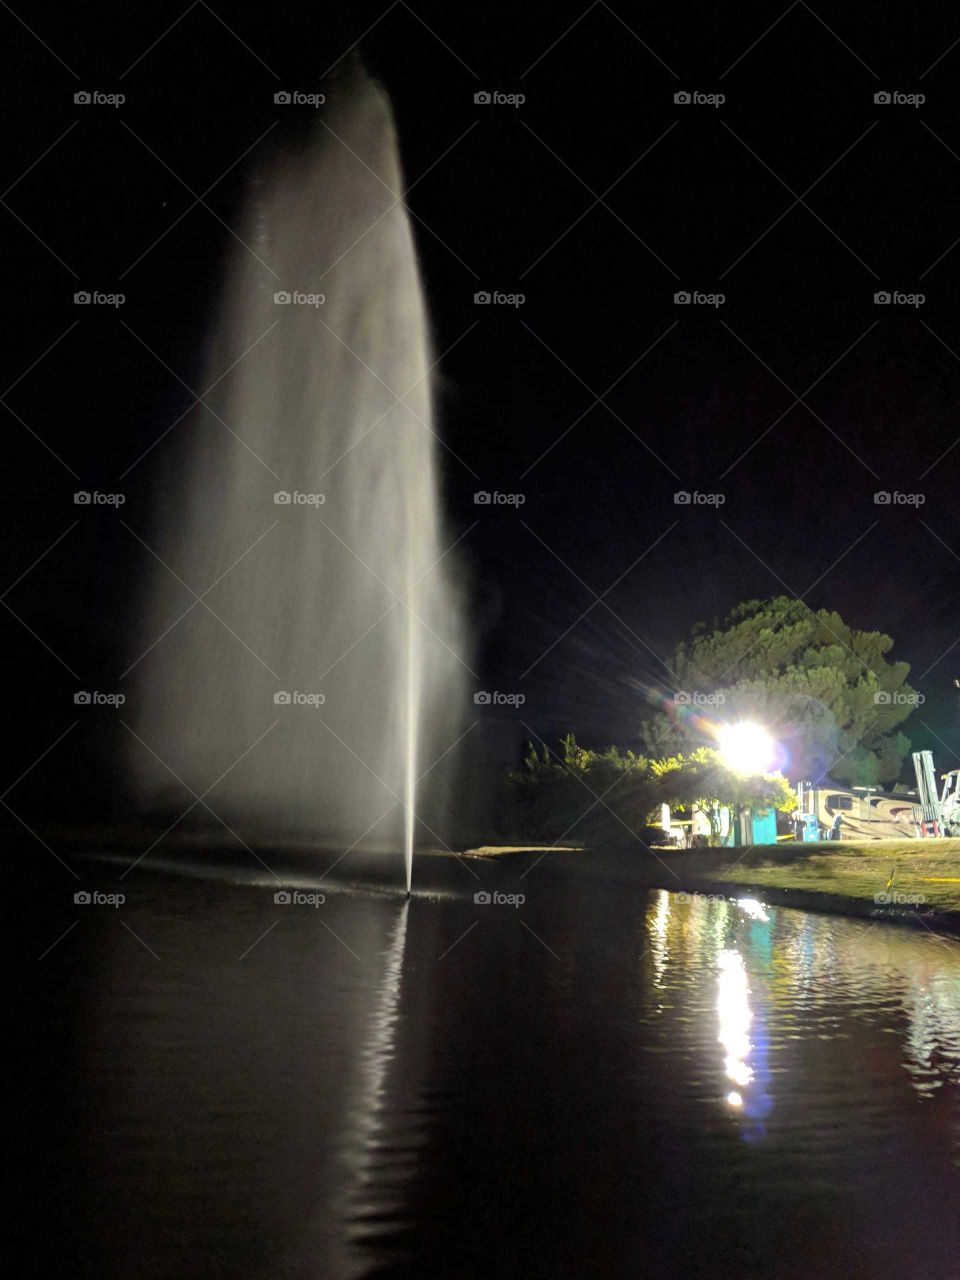 work light on a pond fountain